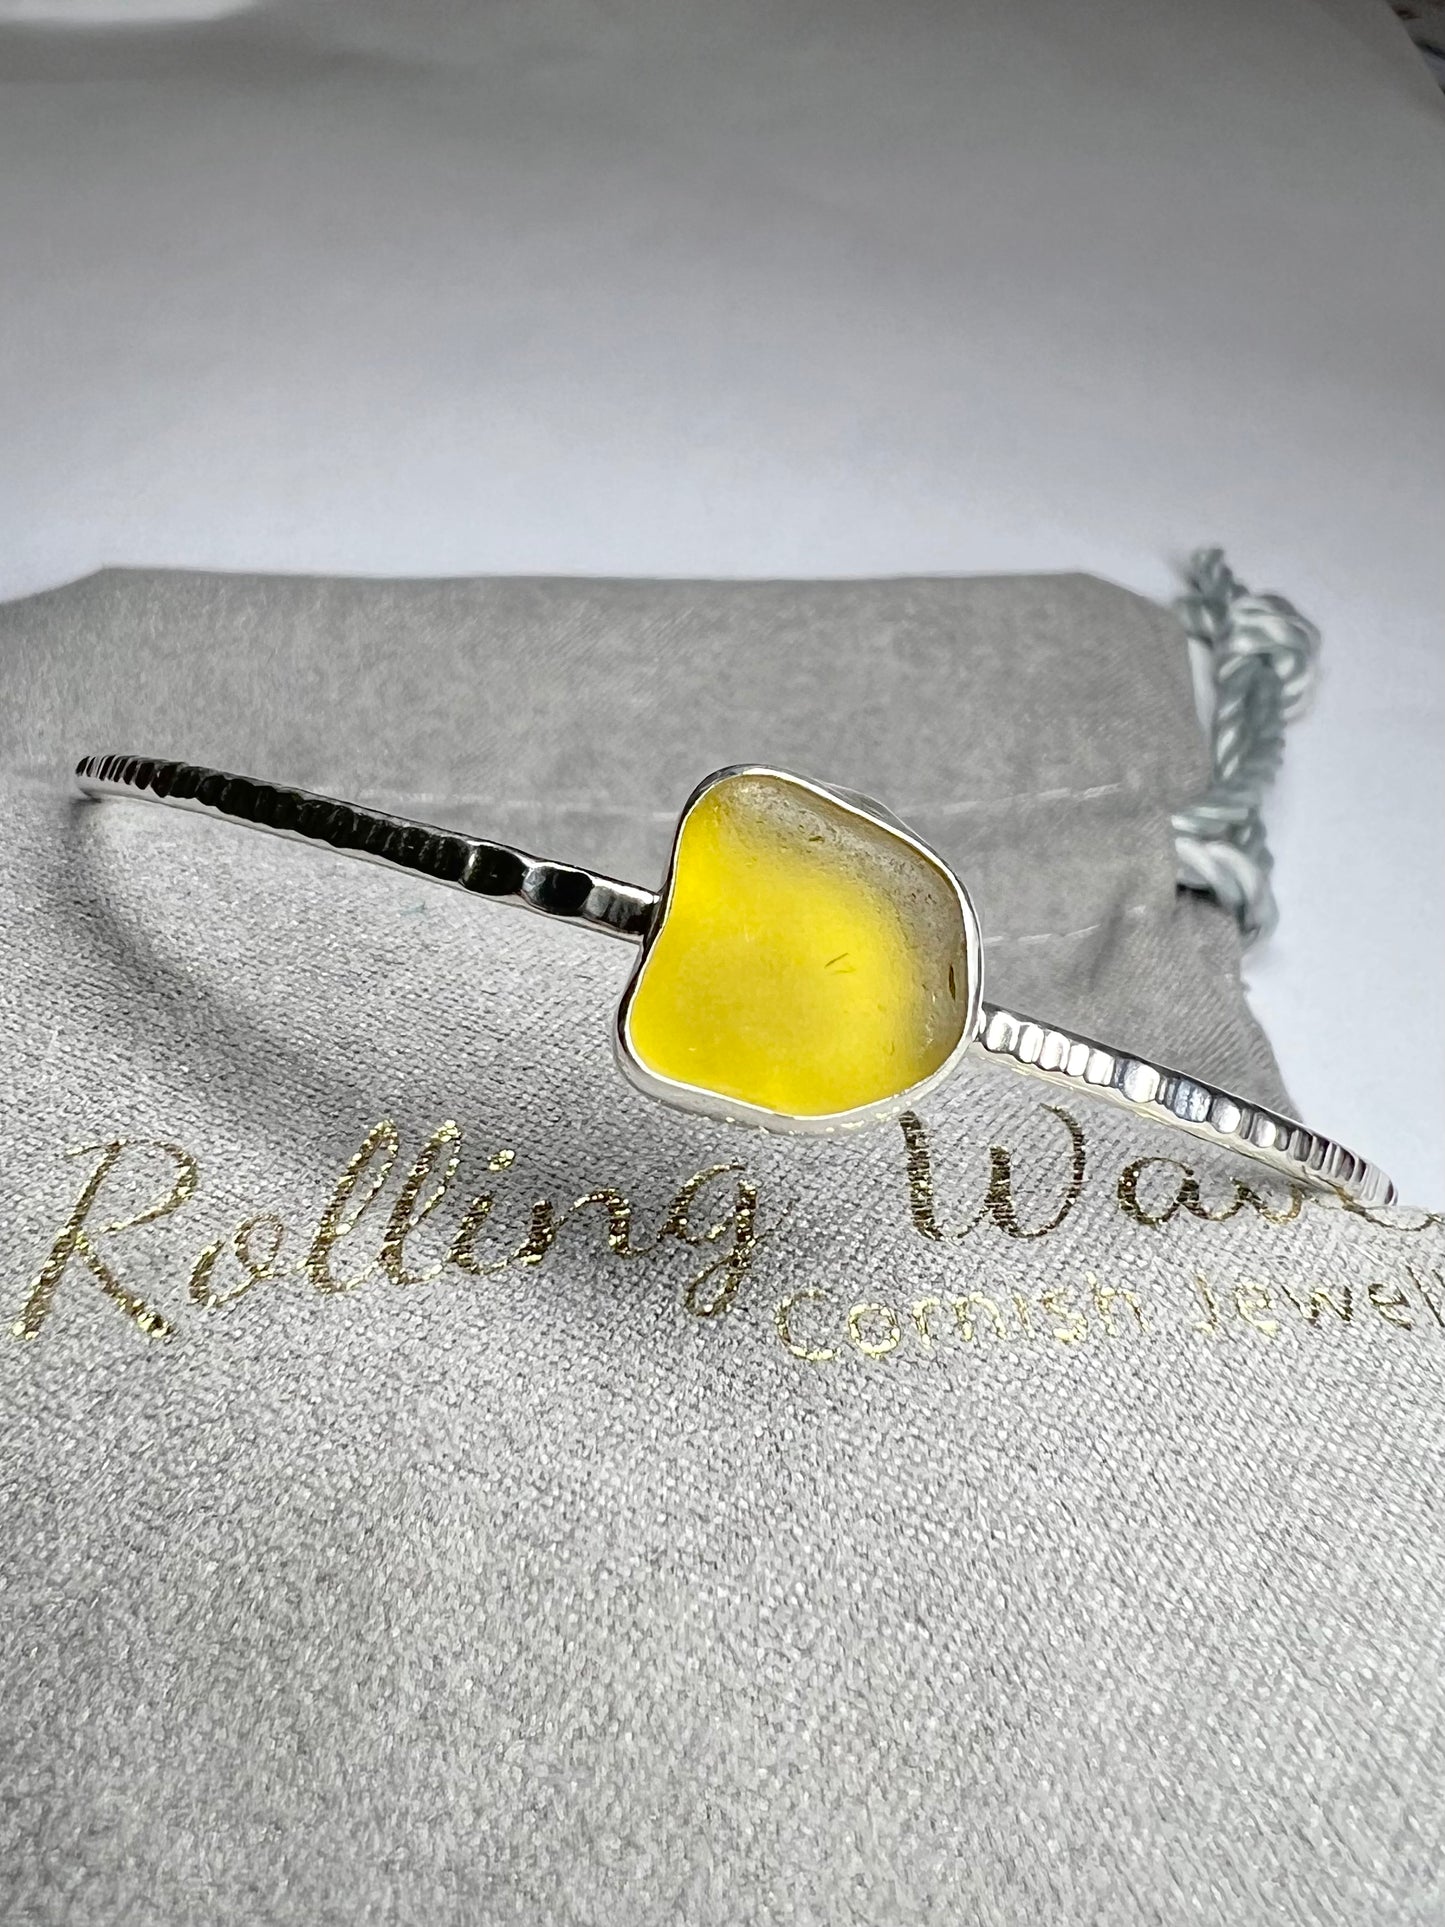 Rare yellow Cornish seaglass bangle